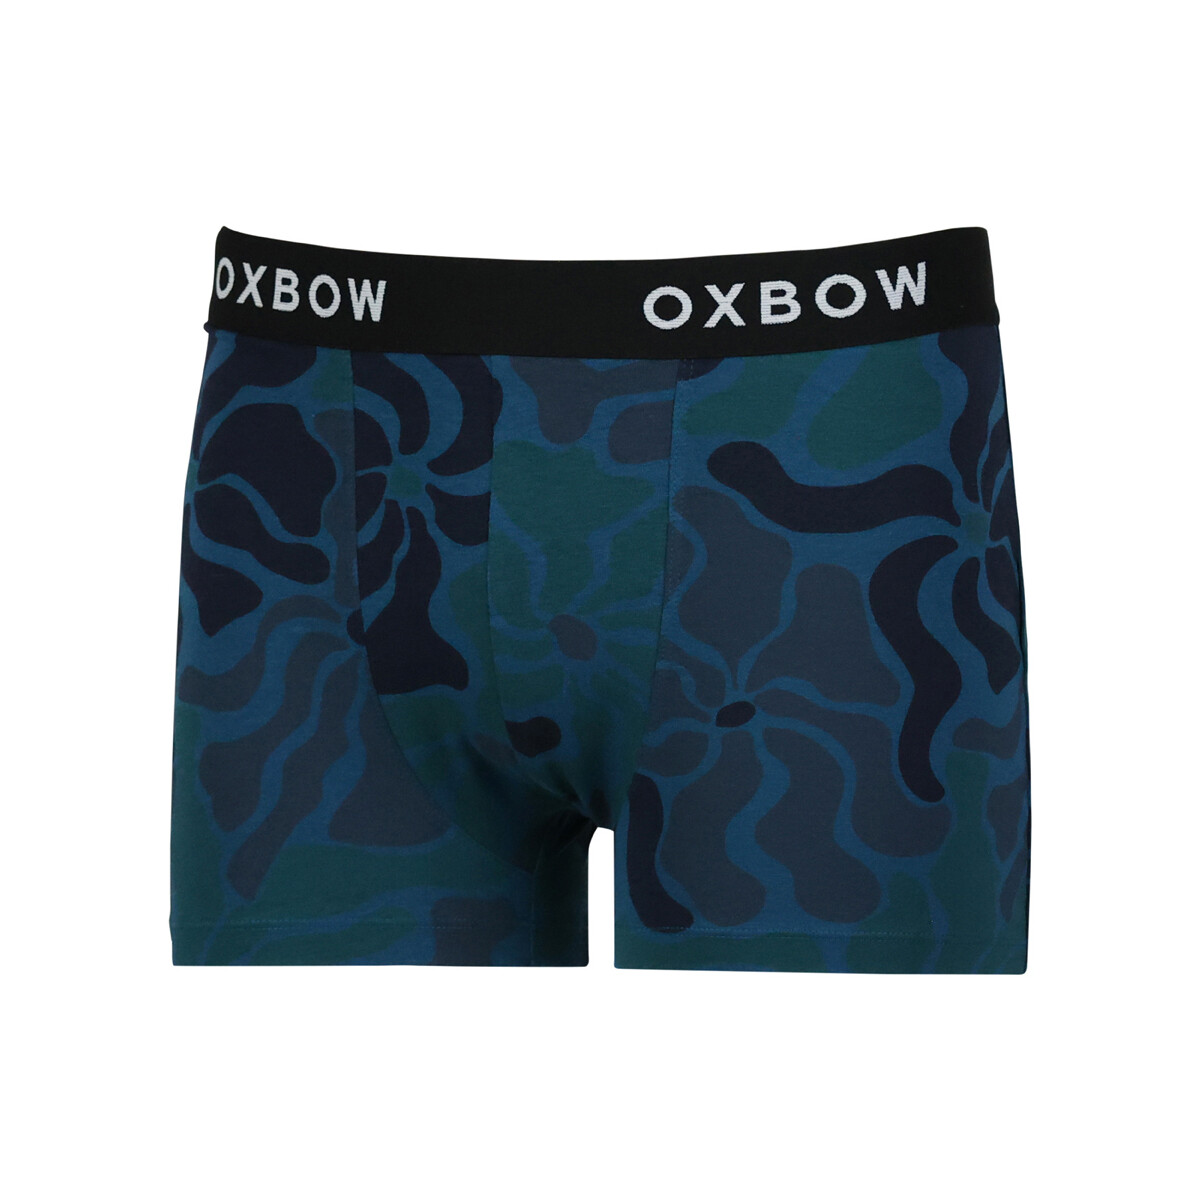 Oxbow Bleu Pack boxers BACALAR HwE3dM0s